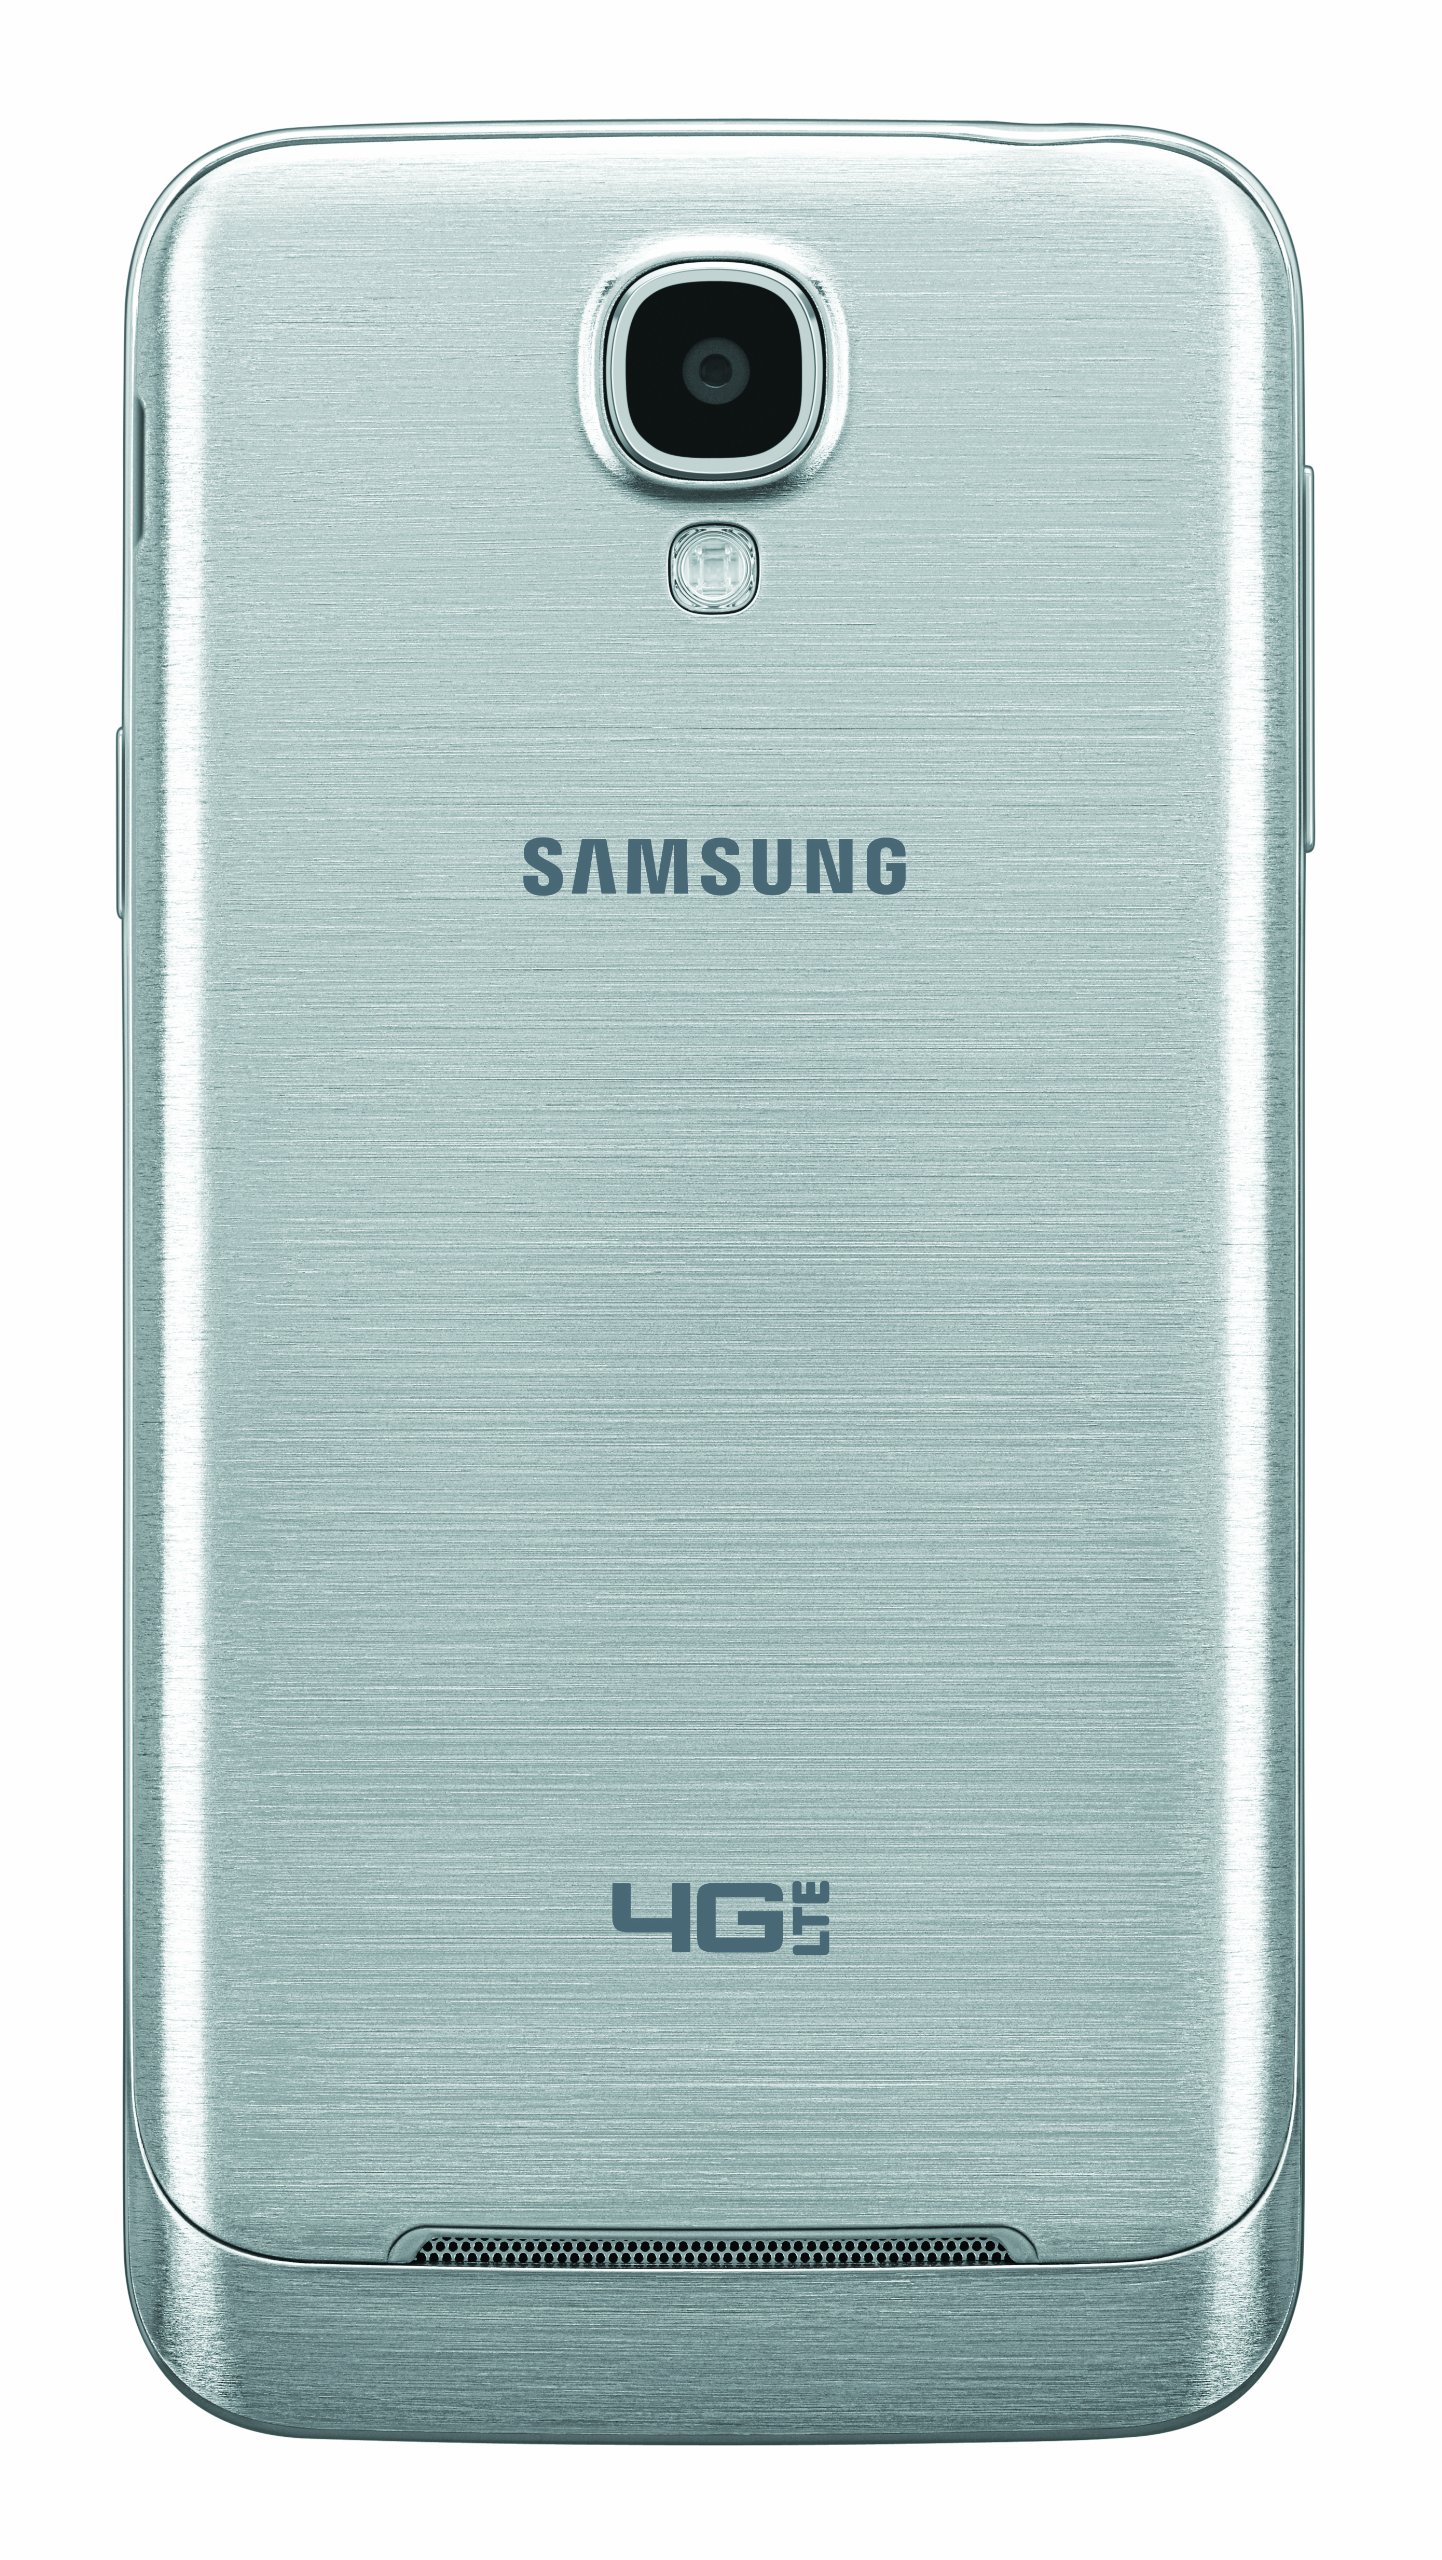 Samsung ATIV SE, Silver 16GB (Verizon Wireless)